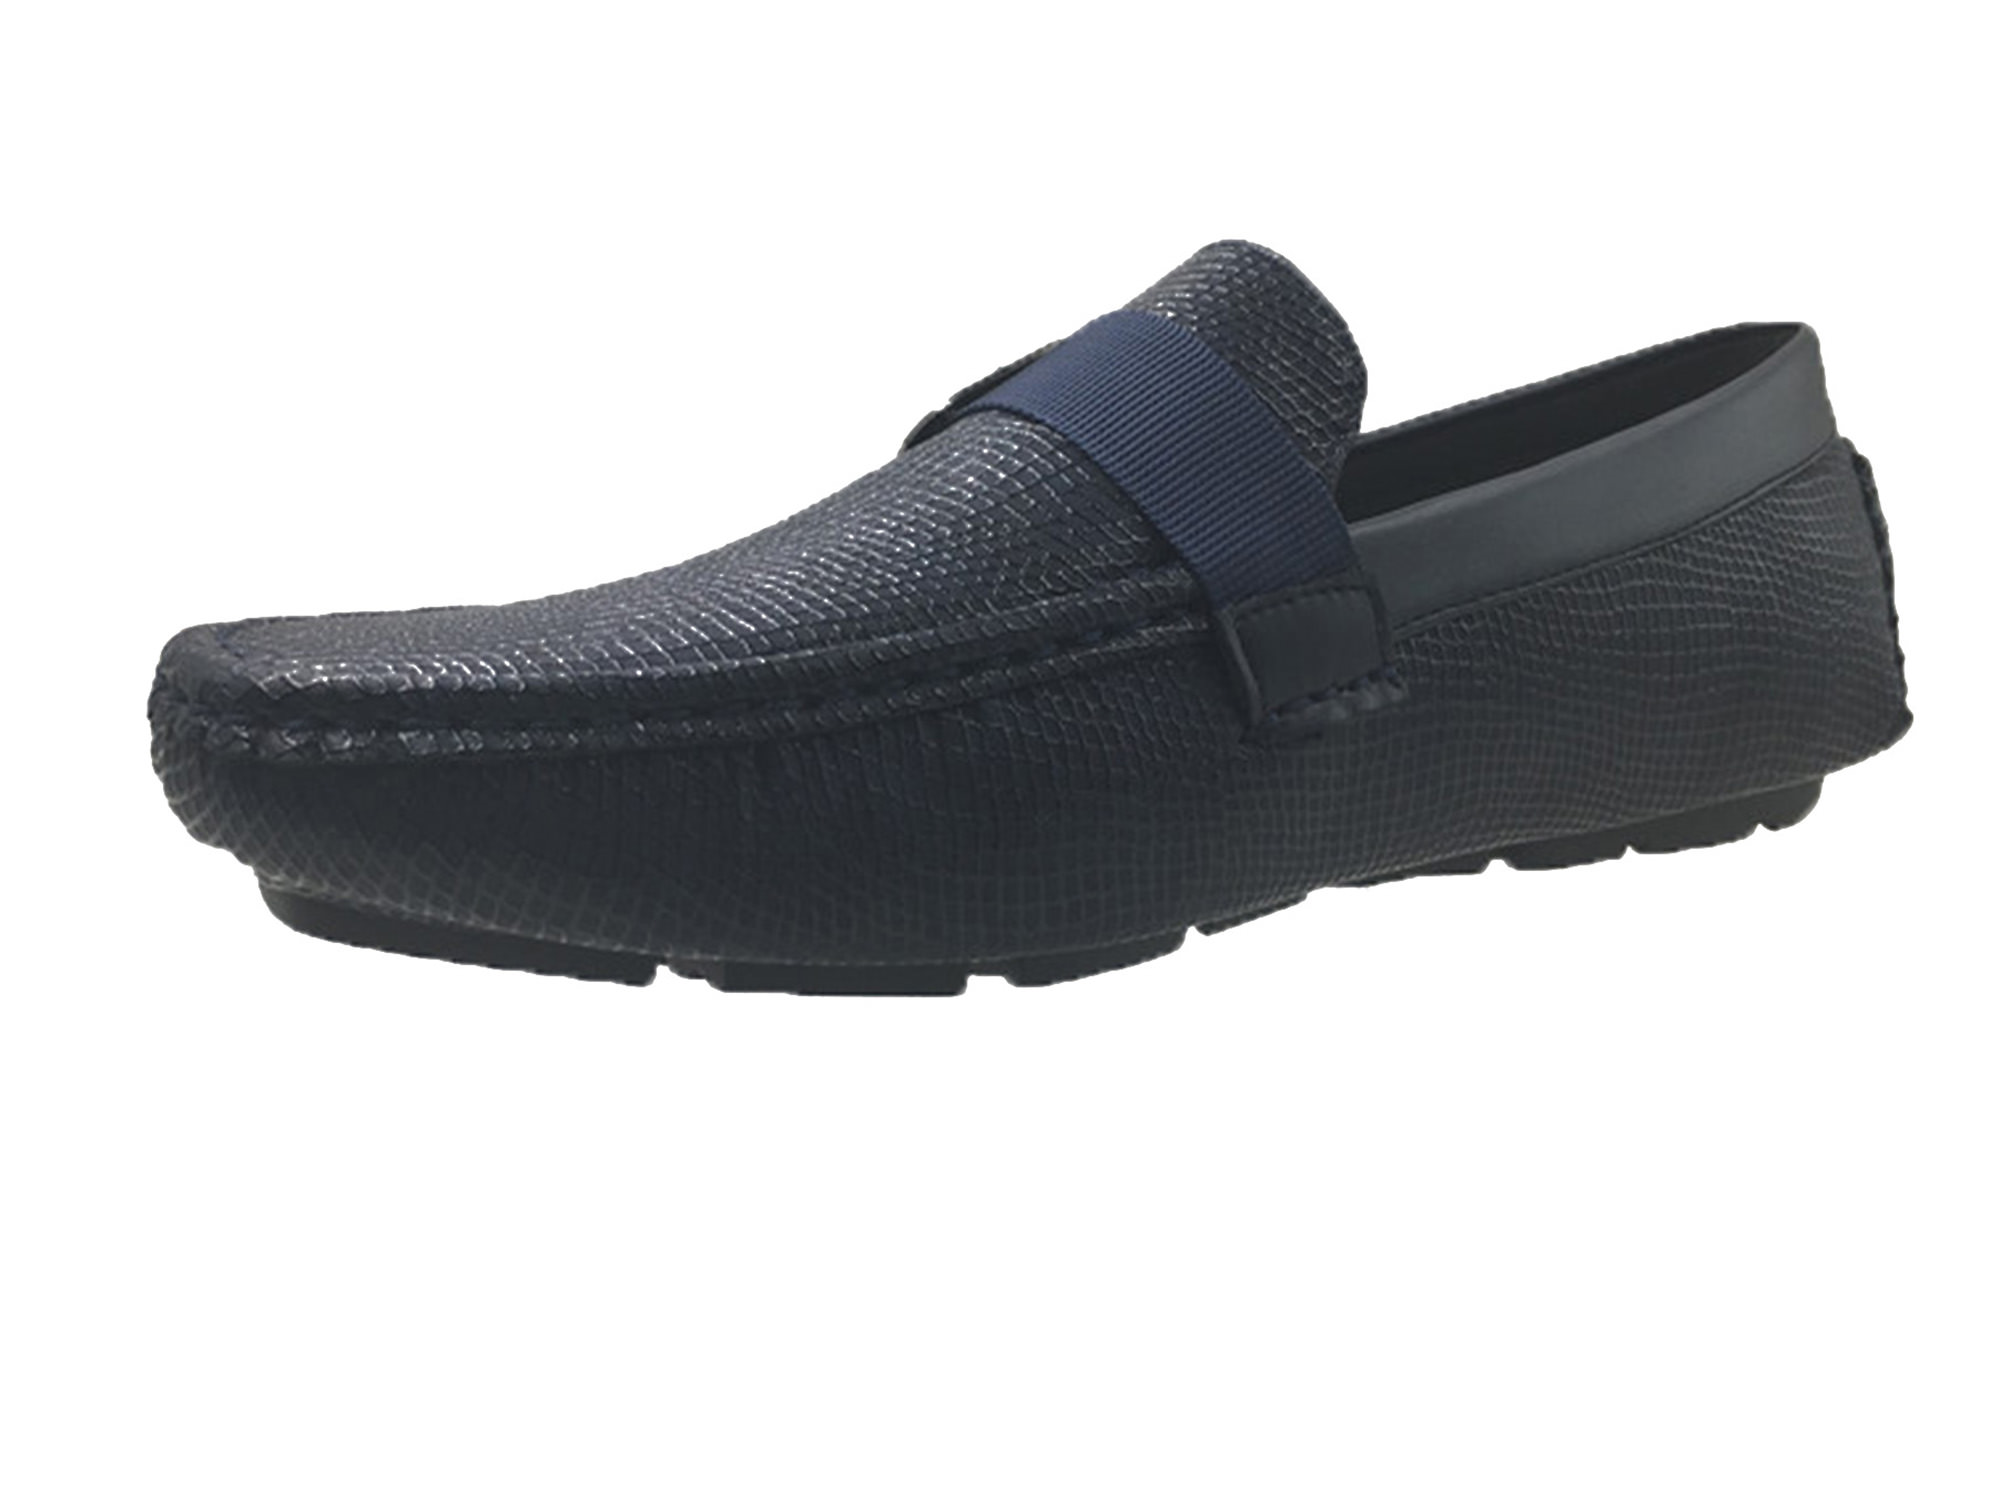 Mecca ME-4103 NORM Mens Belt Strap Slip-On Loafers Shoes - image 3 of 8